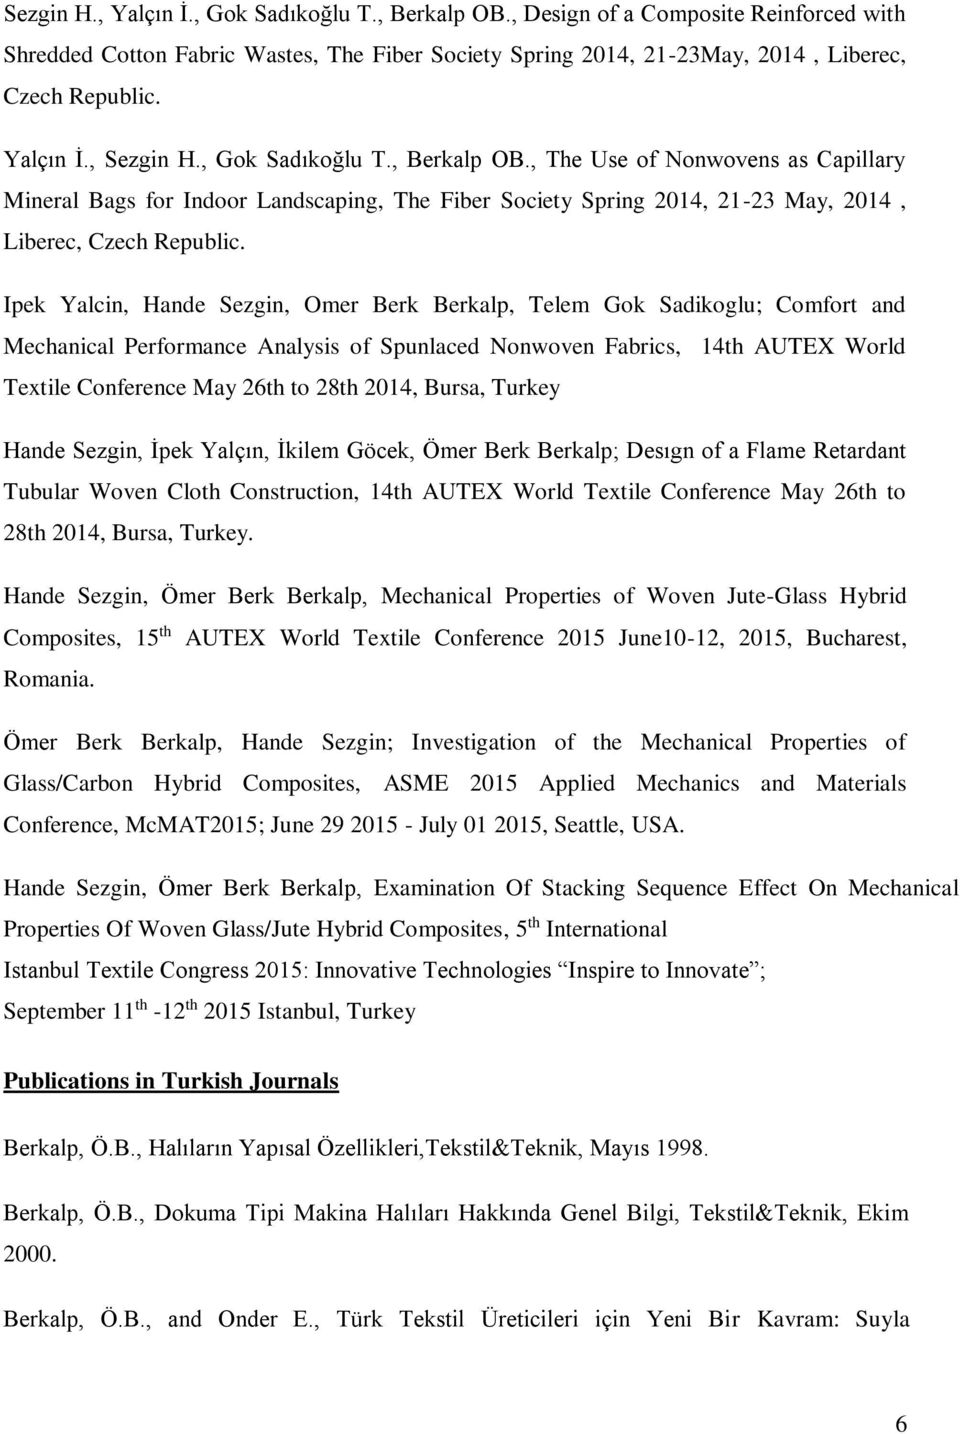 Ipek Yalcin, Hande Sezgin, Omer Berk Berkalp, Telem Gok Sadikoglu; Comfort and Mechanical Performance Analysis of Spunlaced Nonwoven Fabrics, 14th AUTEX World Textile Conference May 26th to 28th